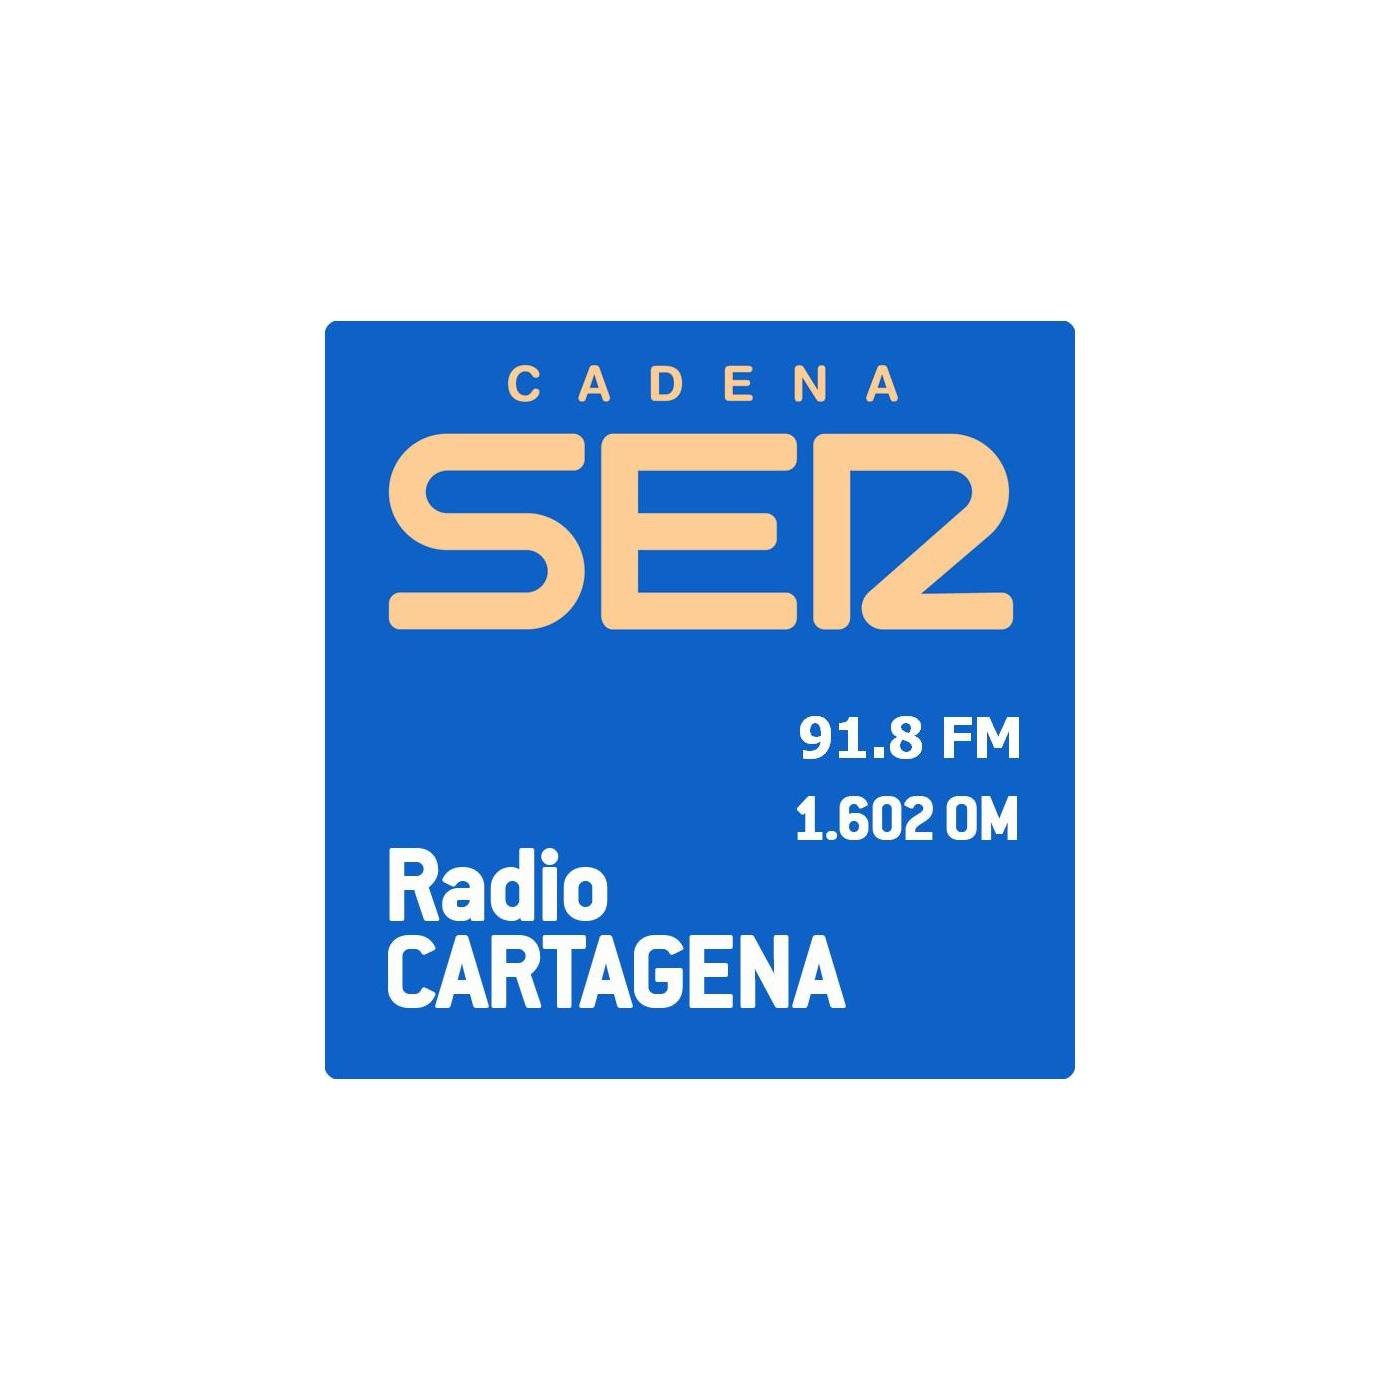 Radio Cartagena Cadena Ser